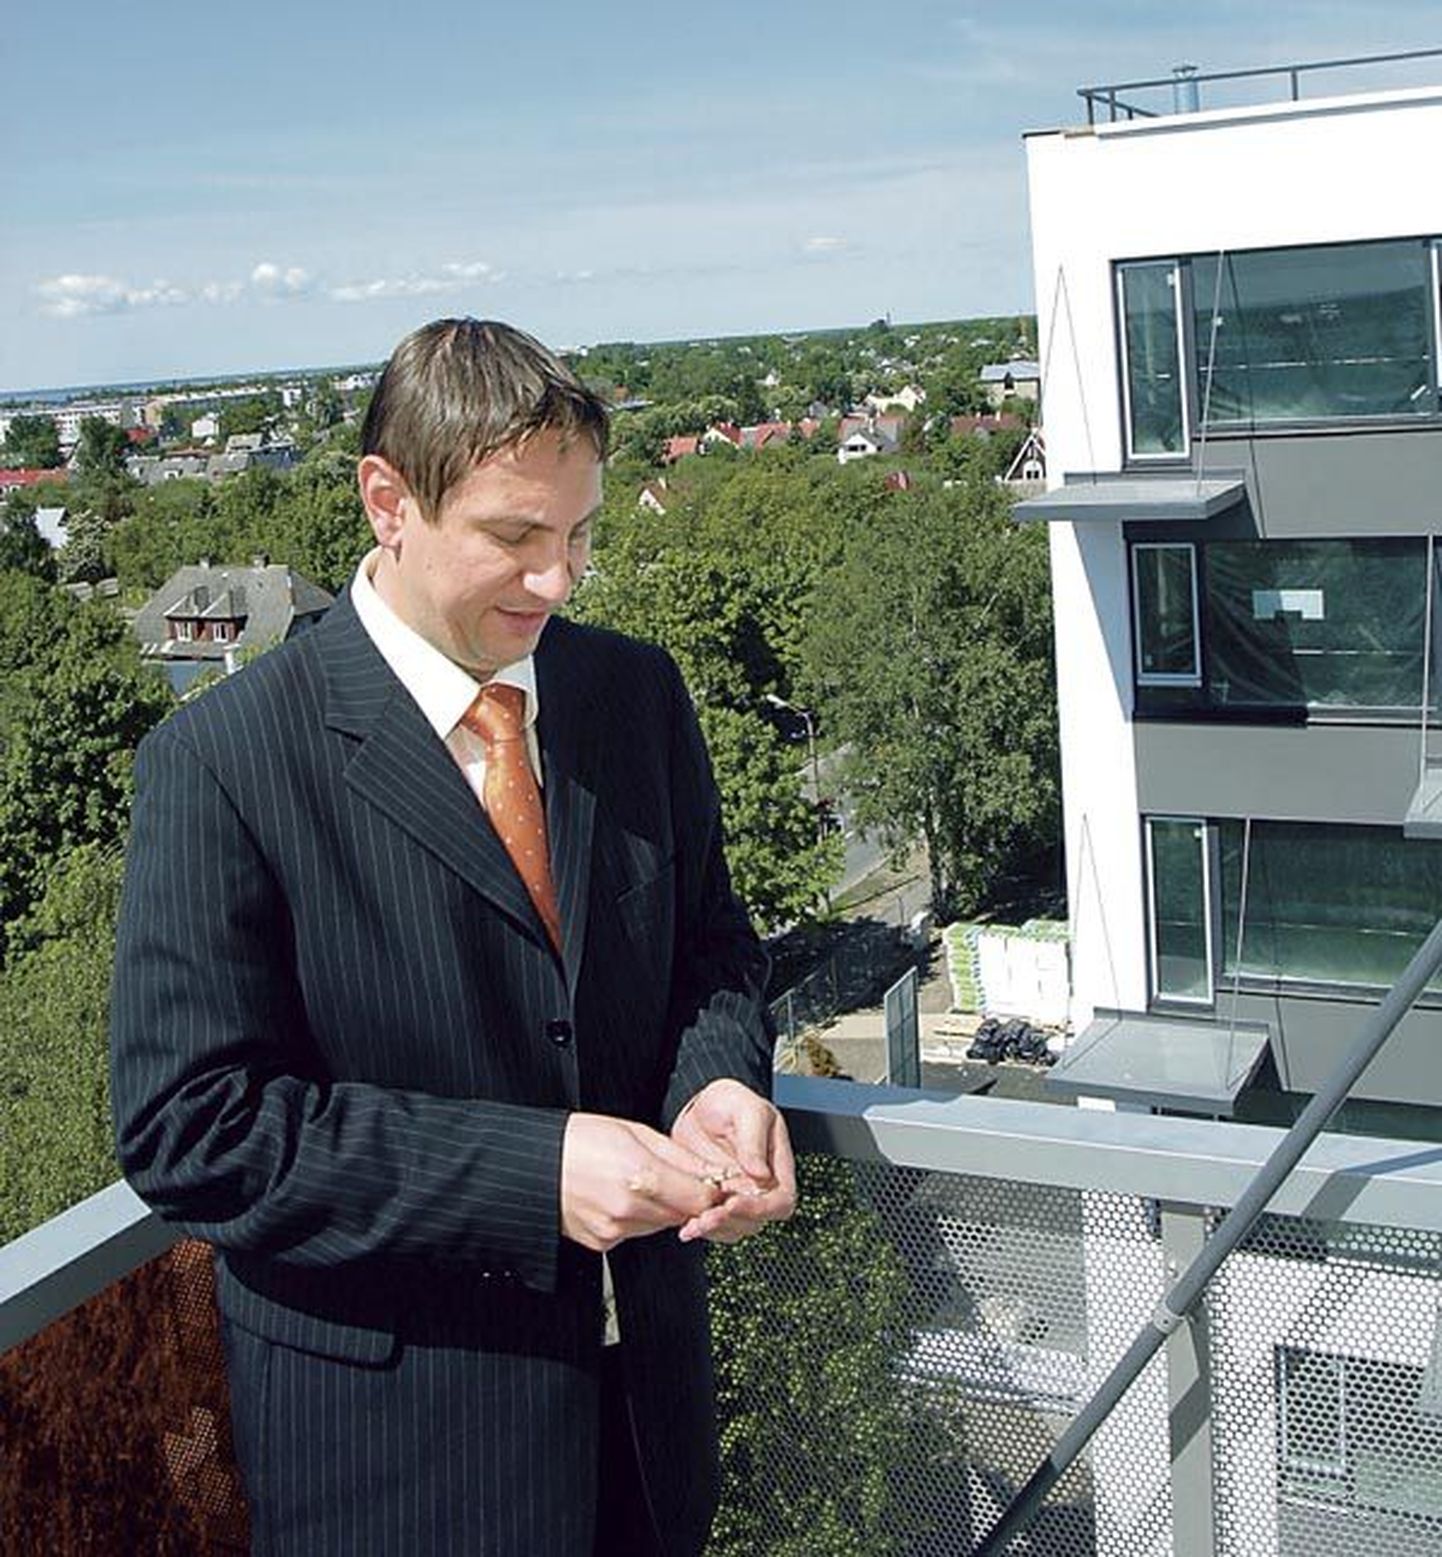 Kinnisvarabüroo LVM maakler Ingmar Saksing tutvustas uutes majades valmivaid kortereid ja neist avanevat vaadet.